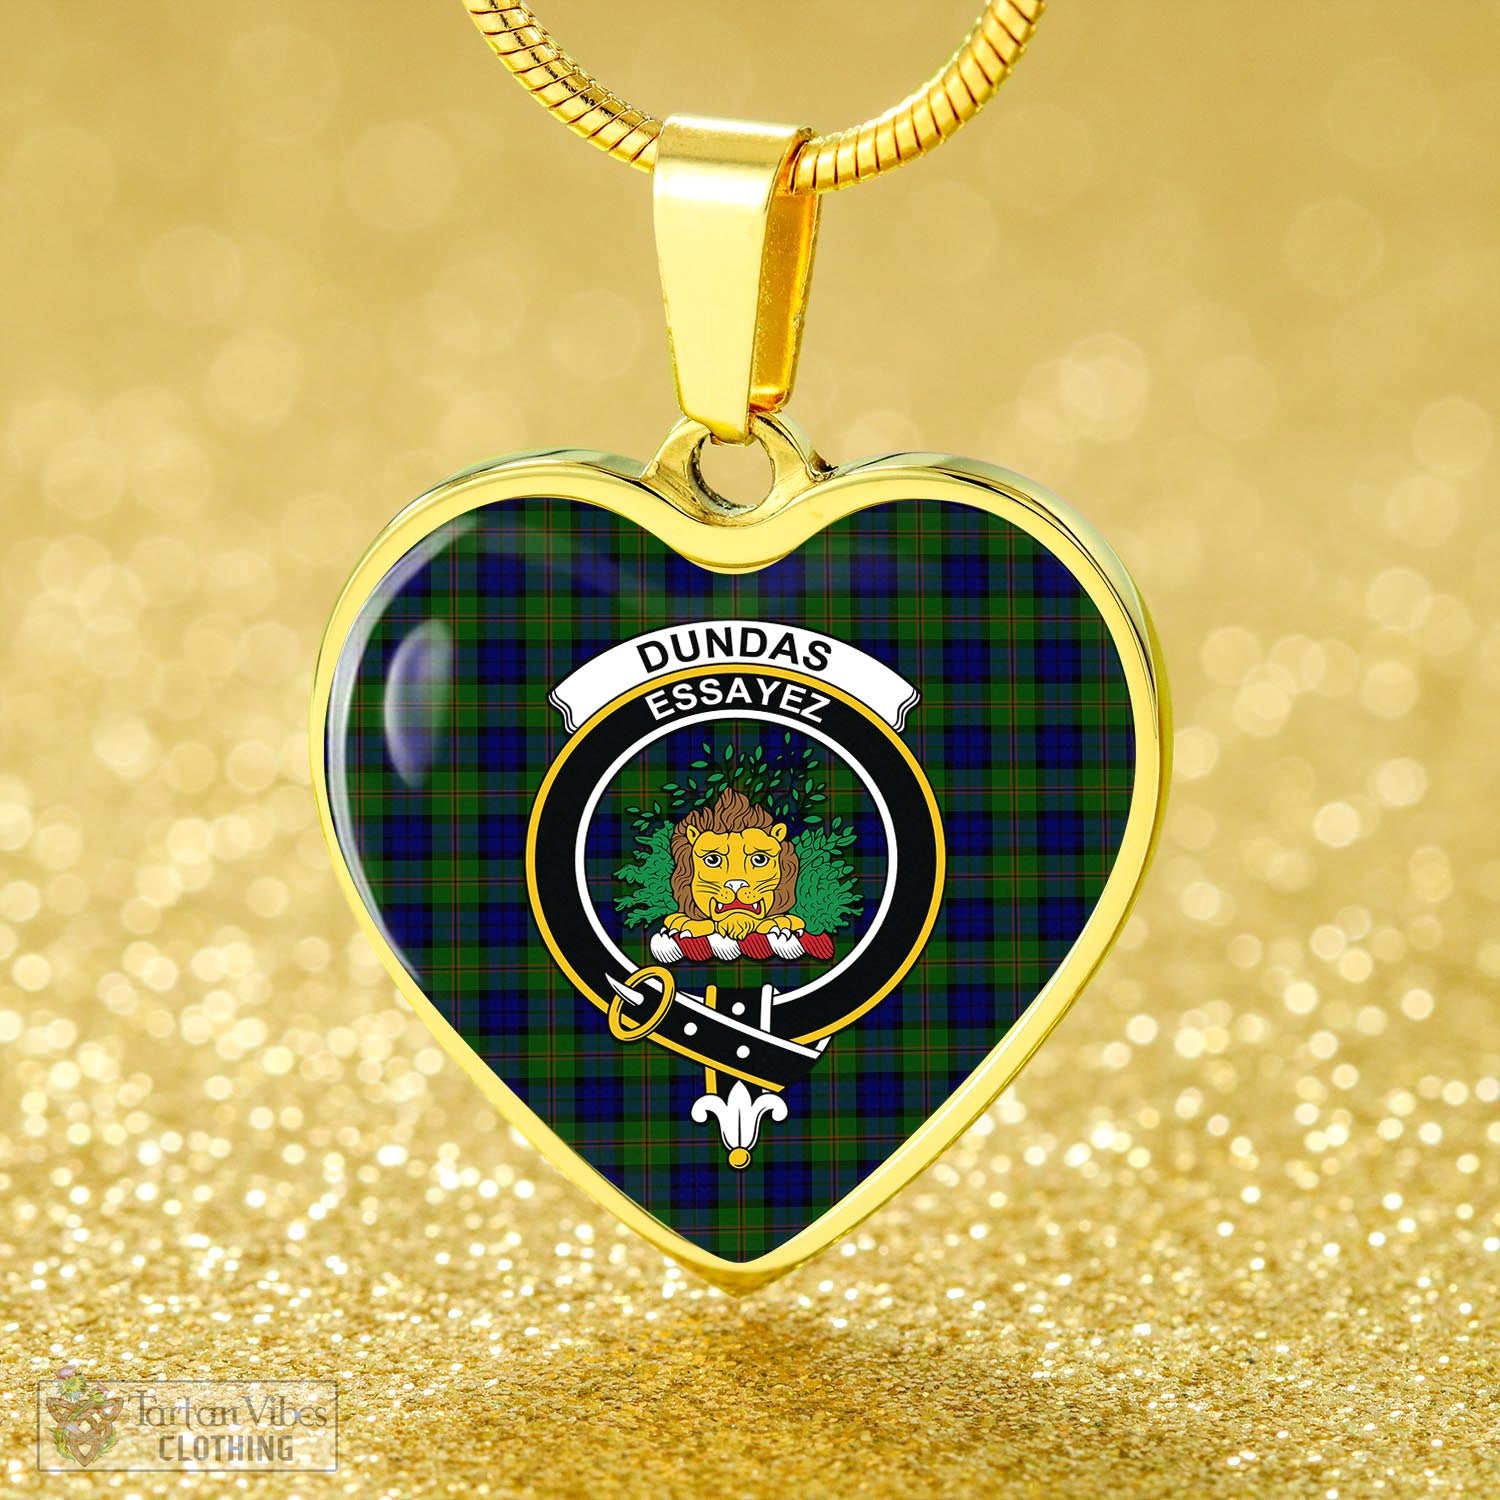 Tartan Vibes Clothing Dundas Modern Tartan Heart Necklace with Family Crest